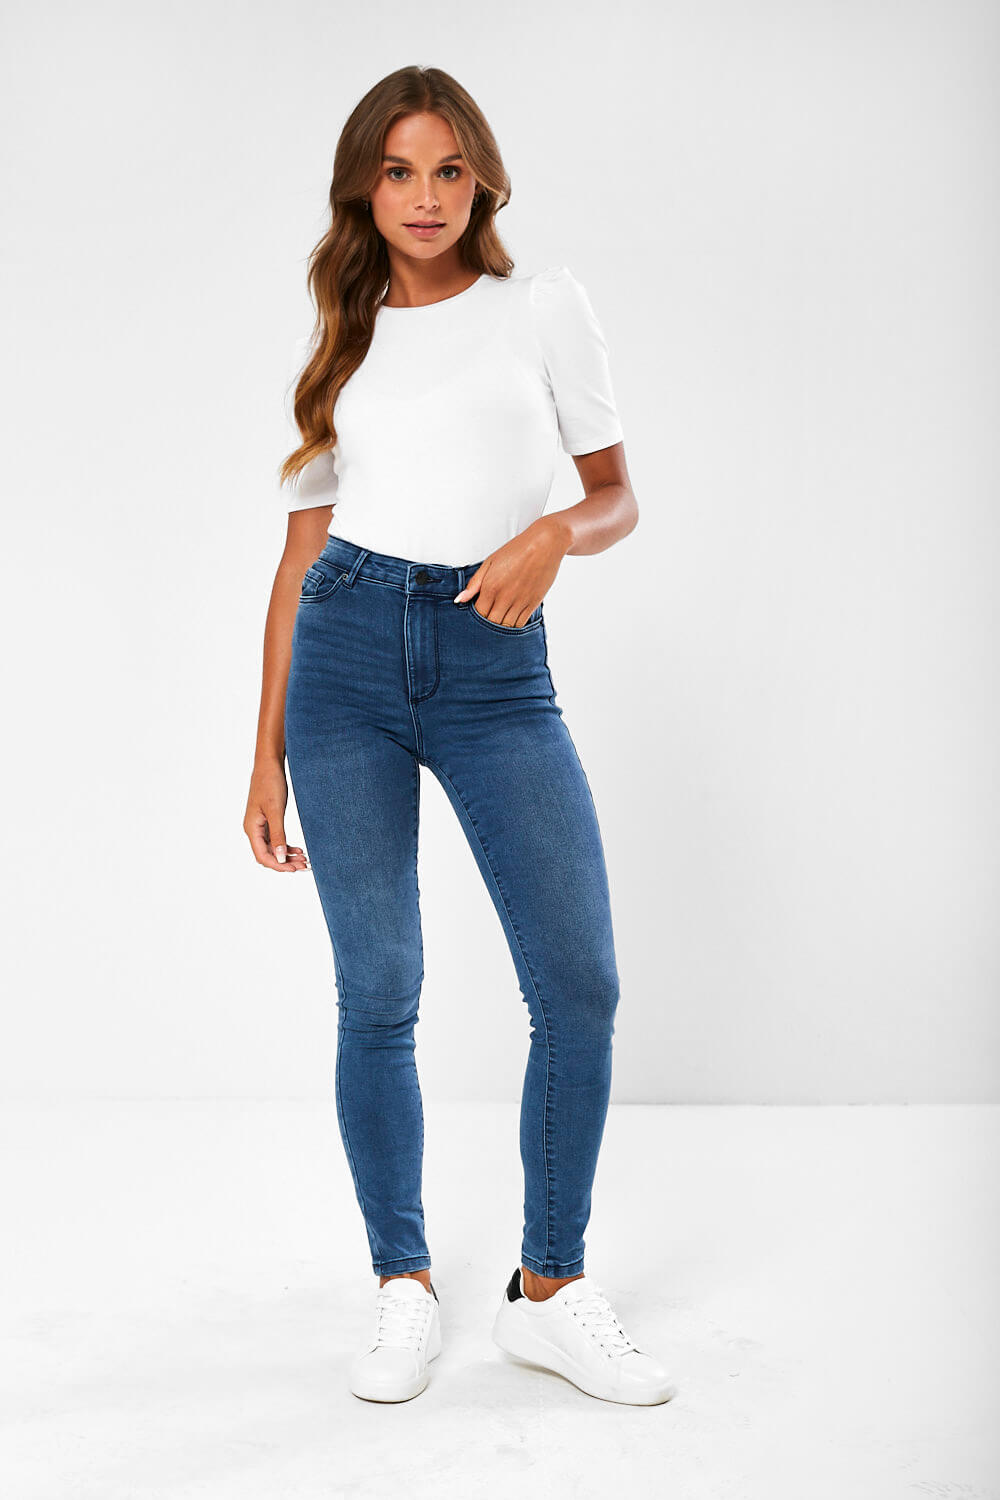 Vero Moda Sophia High Waist Skinny Jeans in Medium Wash | iCLOTHING ...